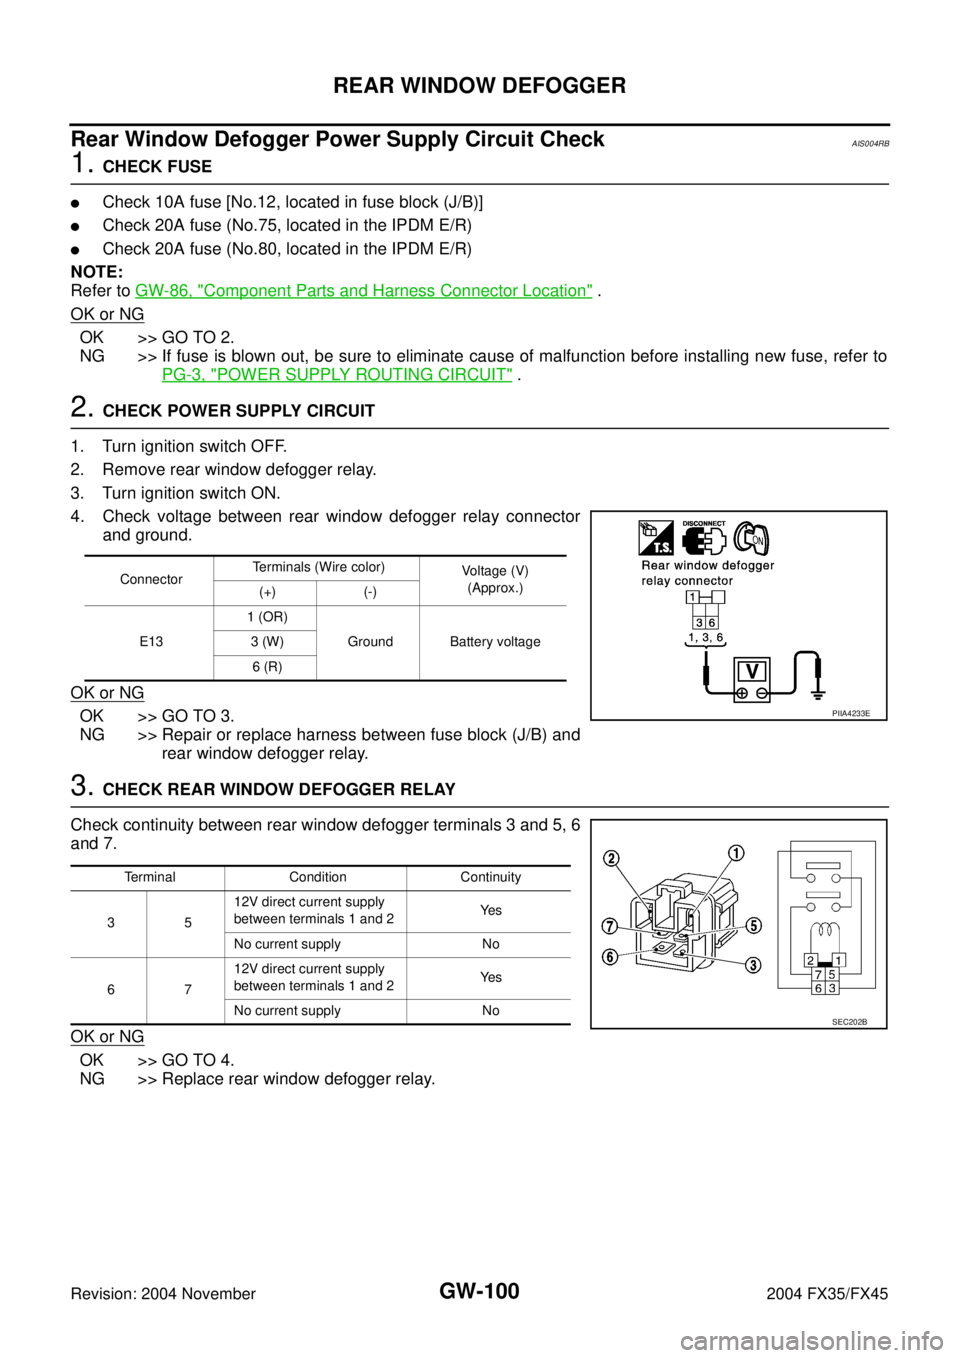 INFINITI FX35 2004  Service Manual GW-100
REAR WINDOW DEFOGGER
Revision: 2004 November 2004 FX35/FX45
Rear Window Defogger Power Supply Circuit CheckAIS004RB
1. CHECK FUSE 
Check 10A fuse [No.12, located in fuse block (J/B)]
Check 20